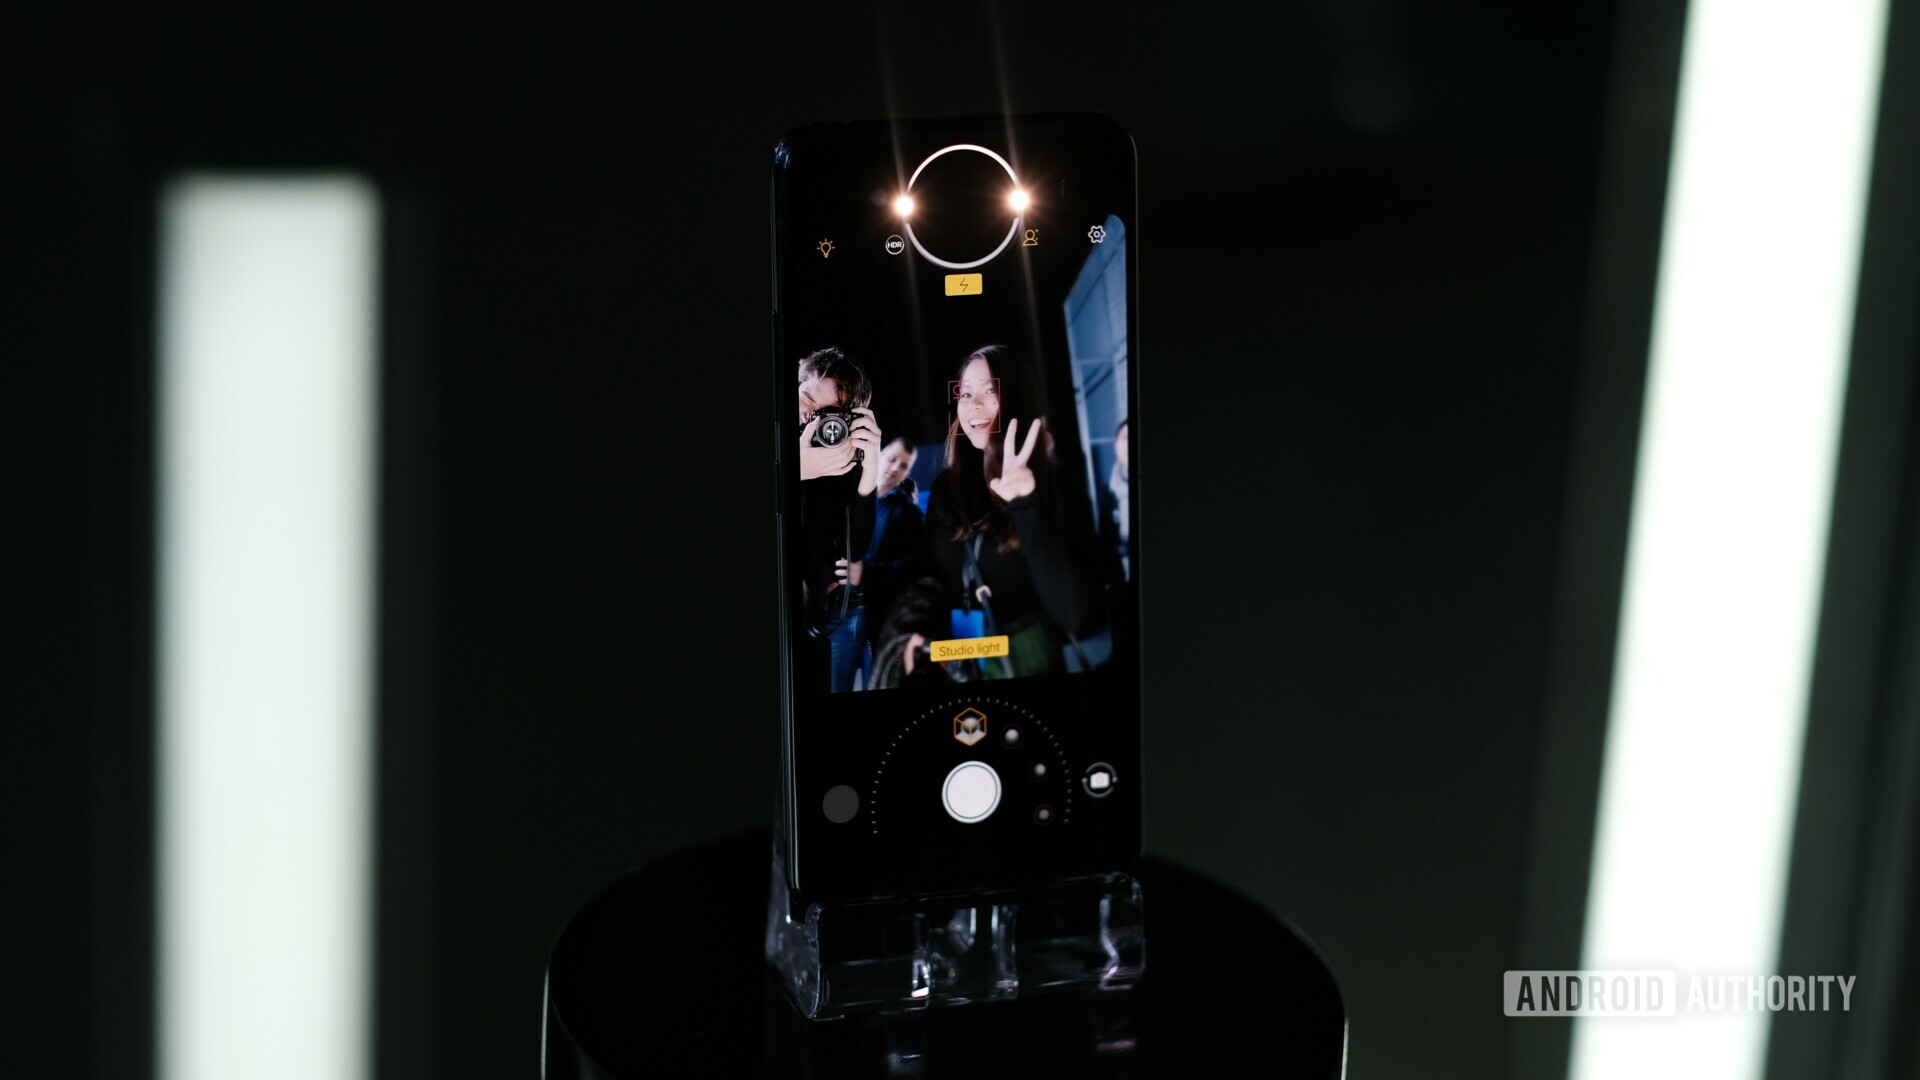 vivo nex dual display screen on camera